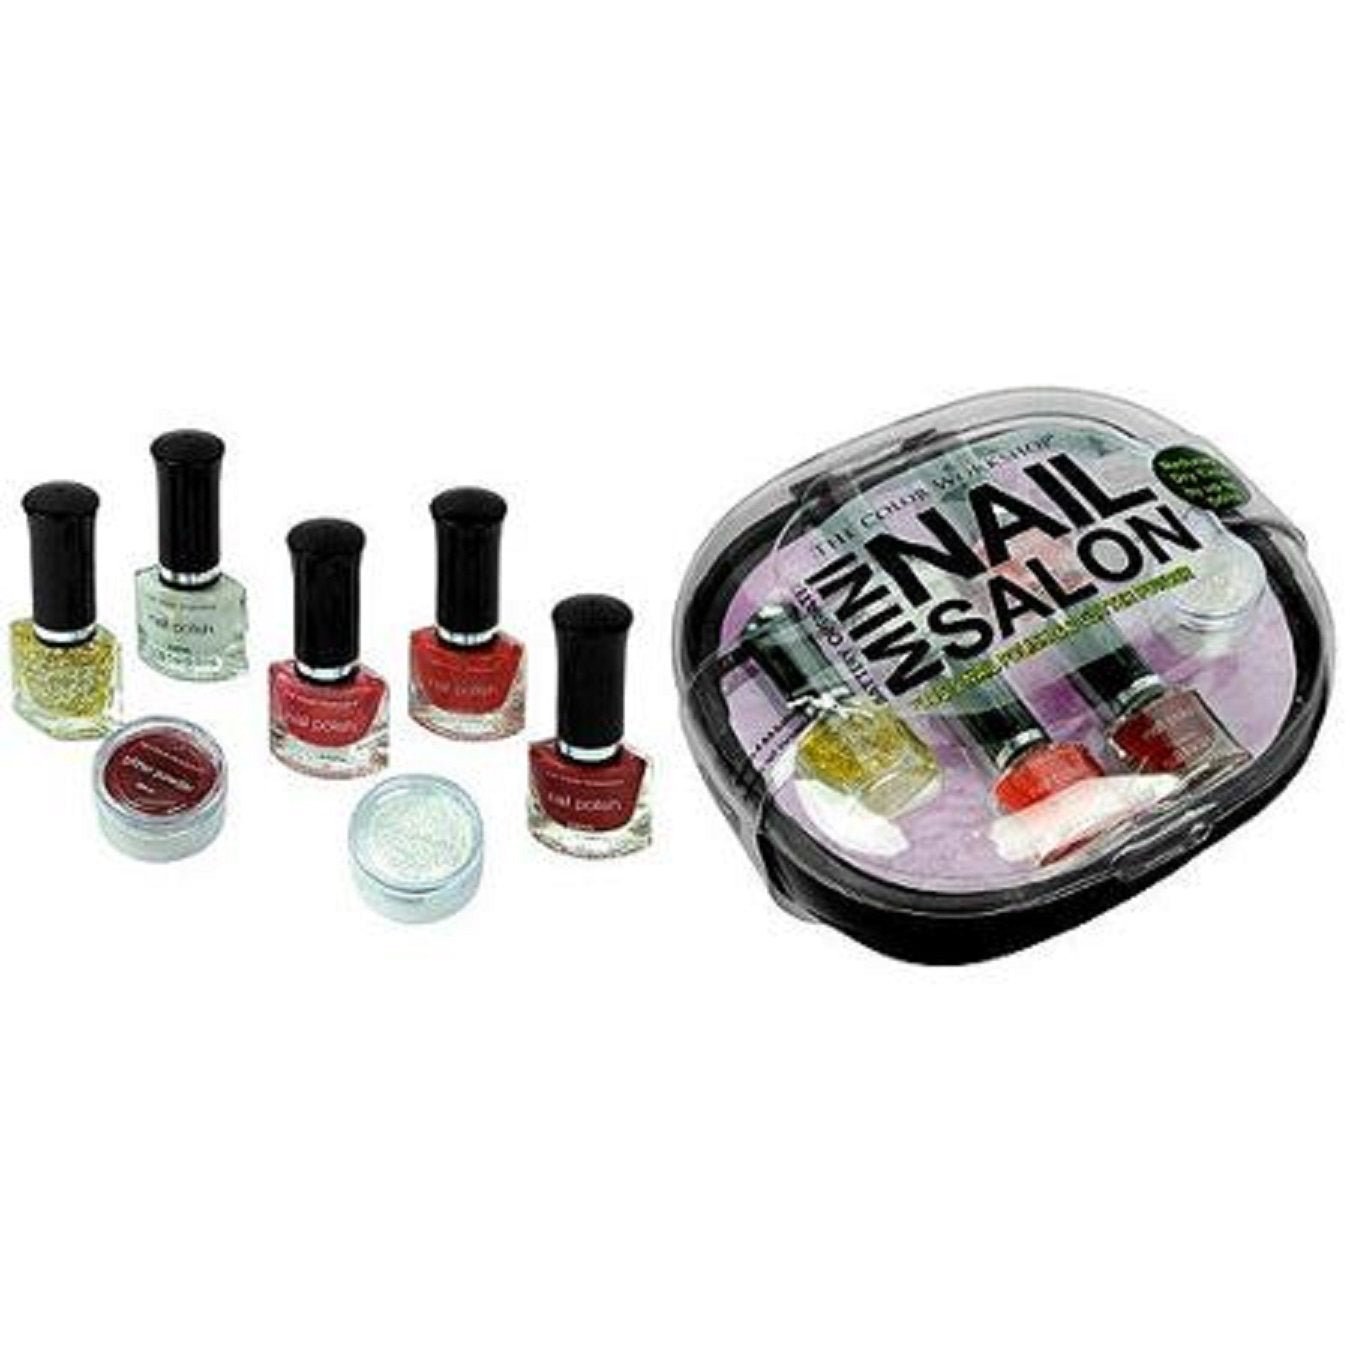 Color Workshop Mini Nail Salon - Bargainwizz